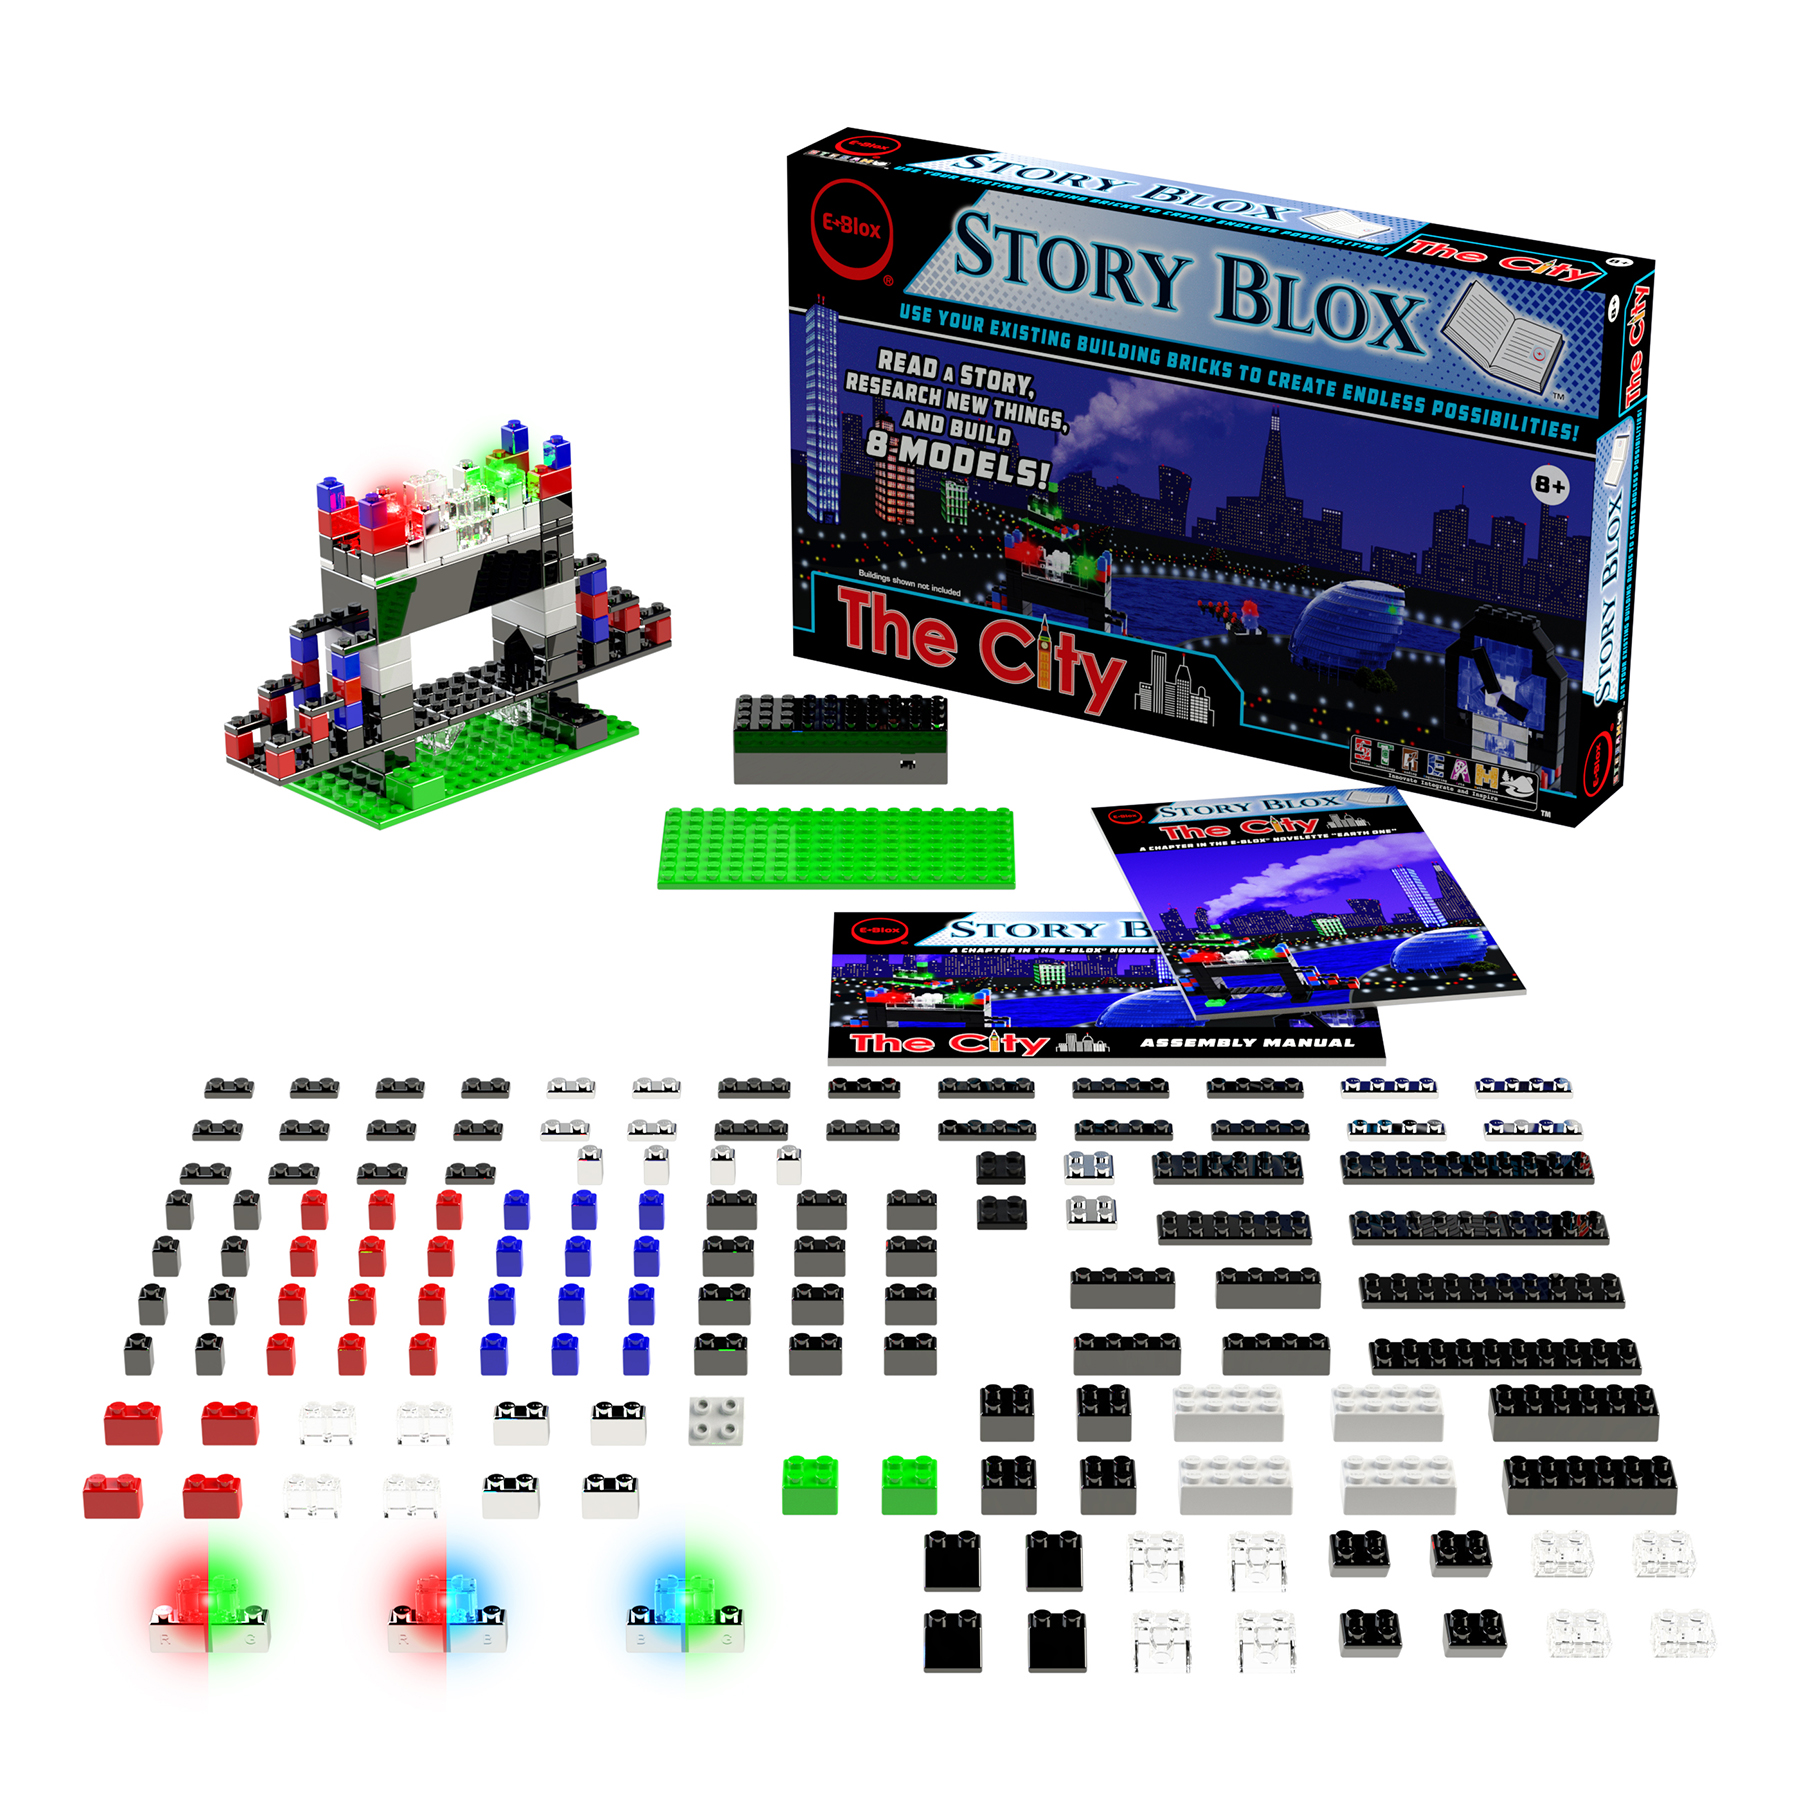 E-Blox Story Blox - The City, Light-Up Building Blocks, 138 Pieces